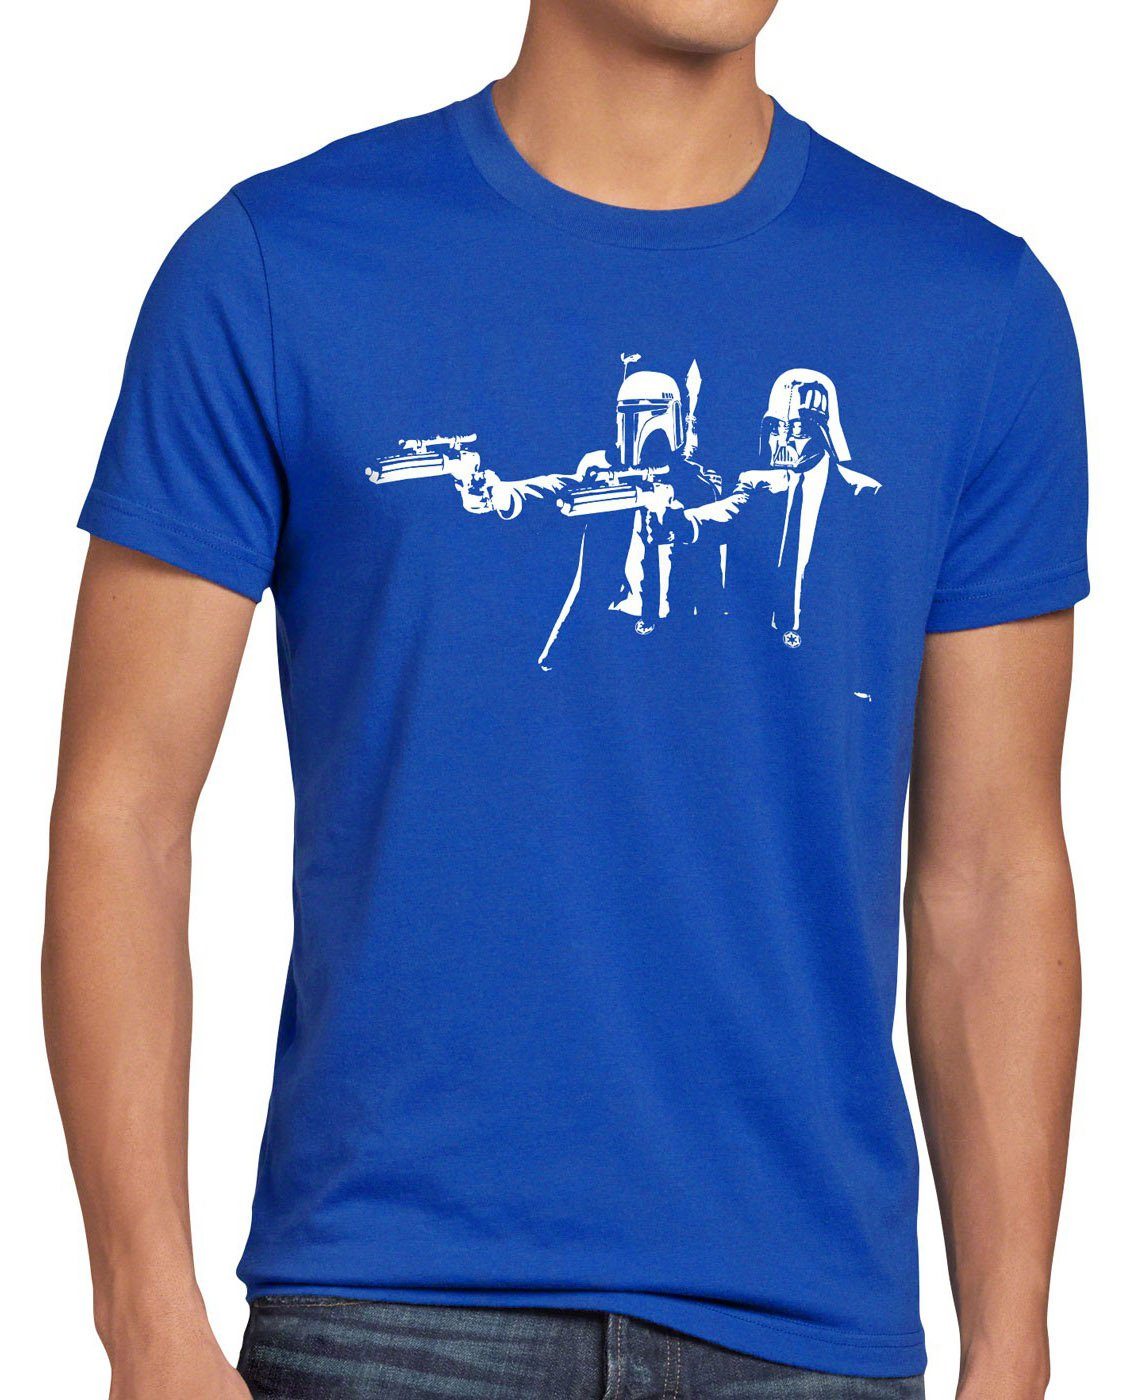 style3 Print-Shirt Herren T-Shirt Darth Fiction fett star pulp wars imperium boba blau